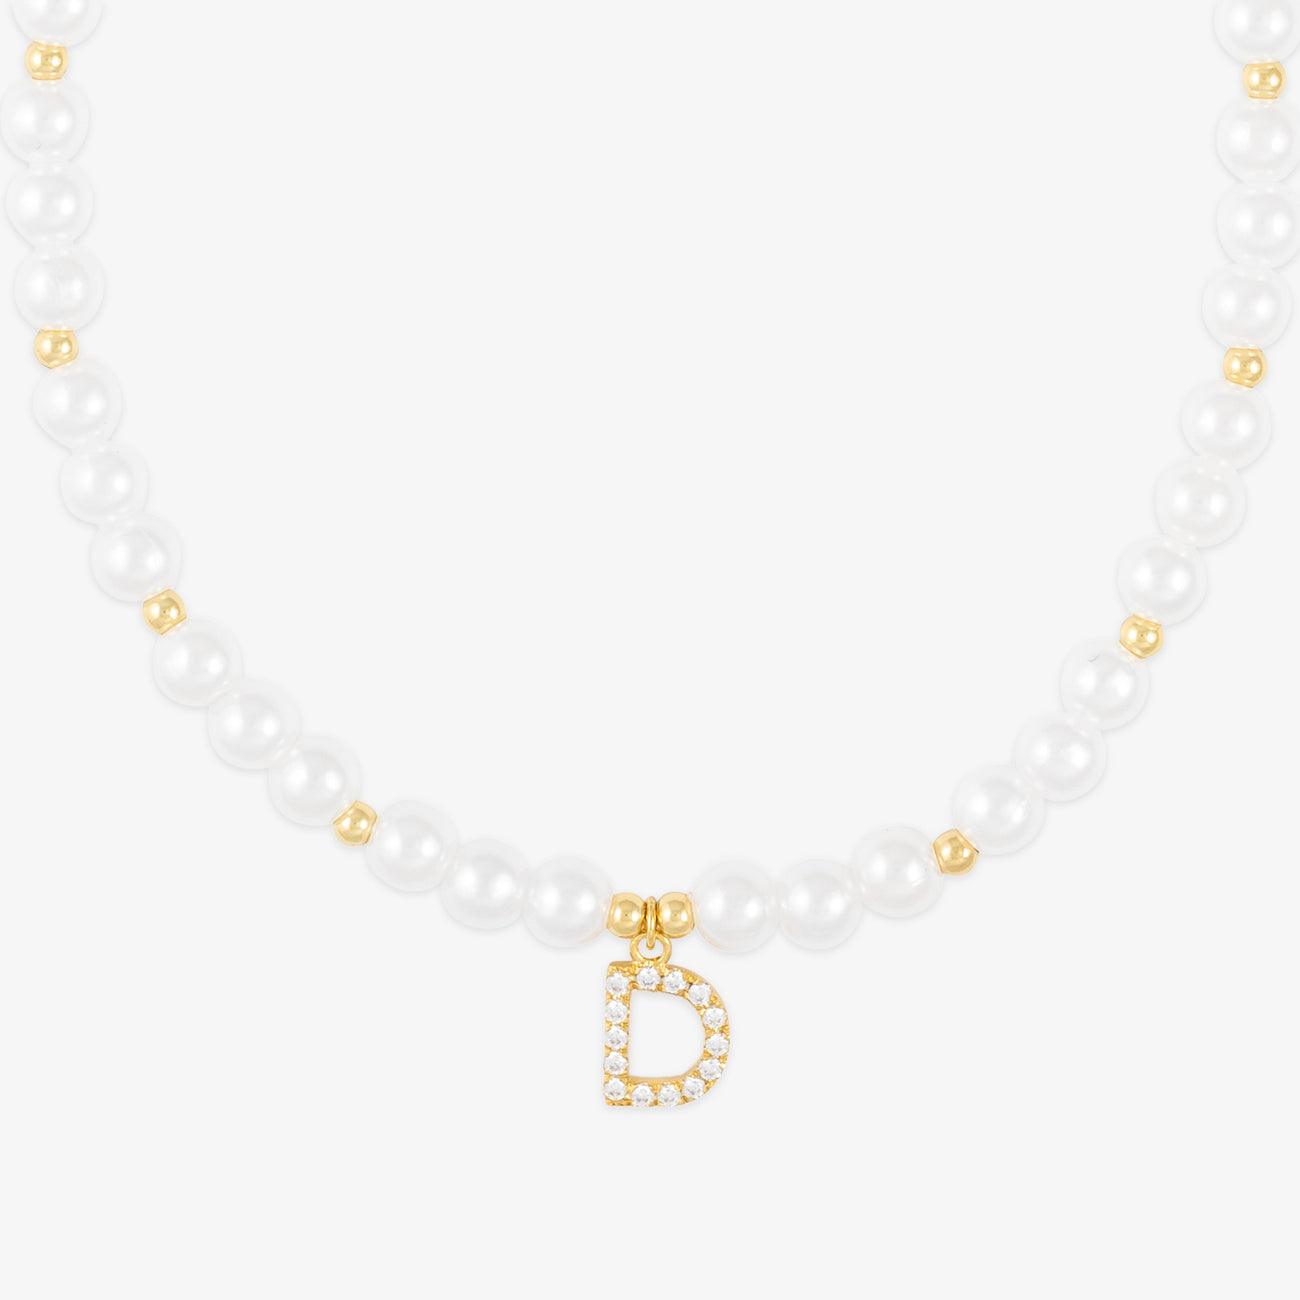 herzschmuck Elegant Pearl Necklace with Zirconia-Studded Initial